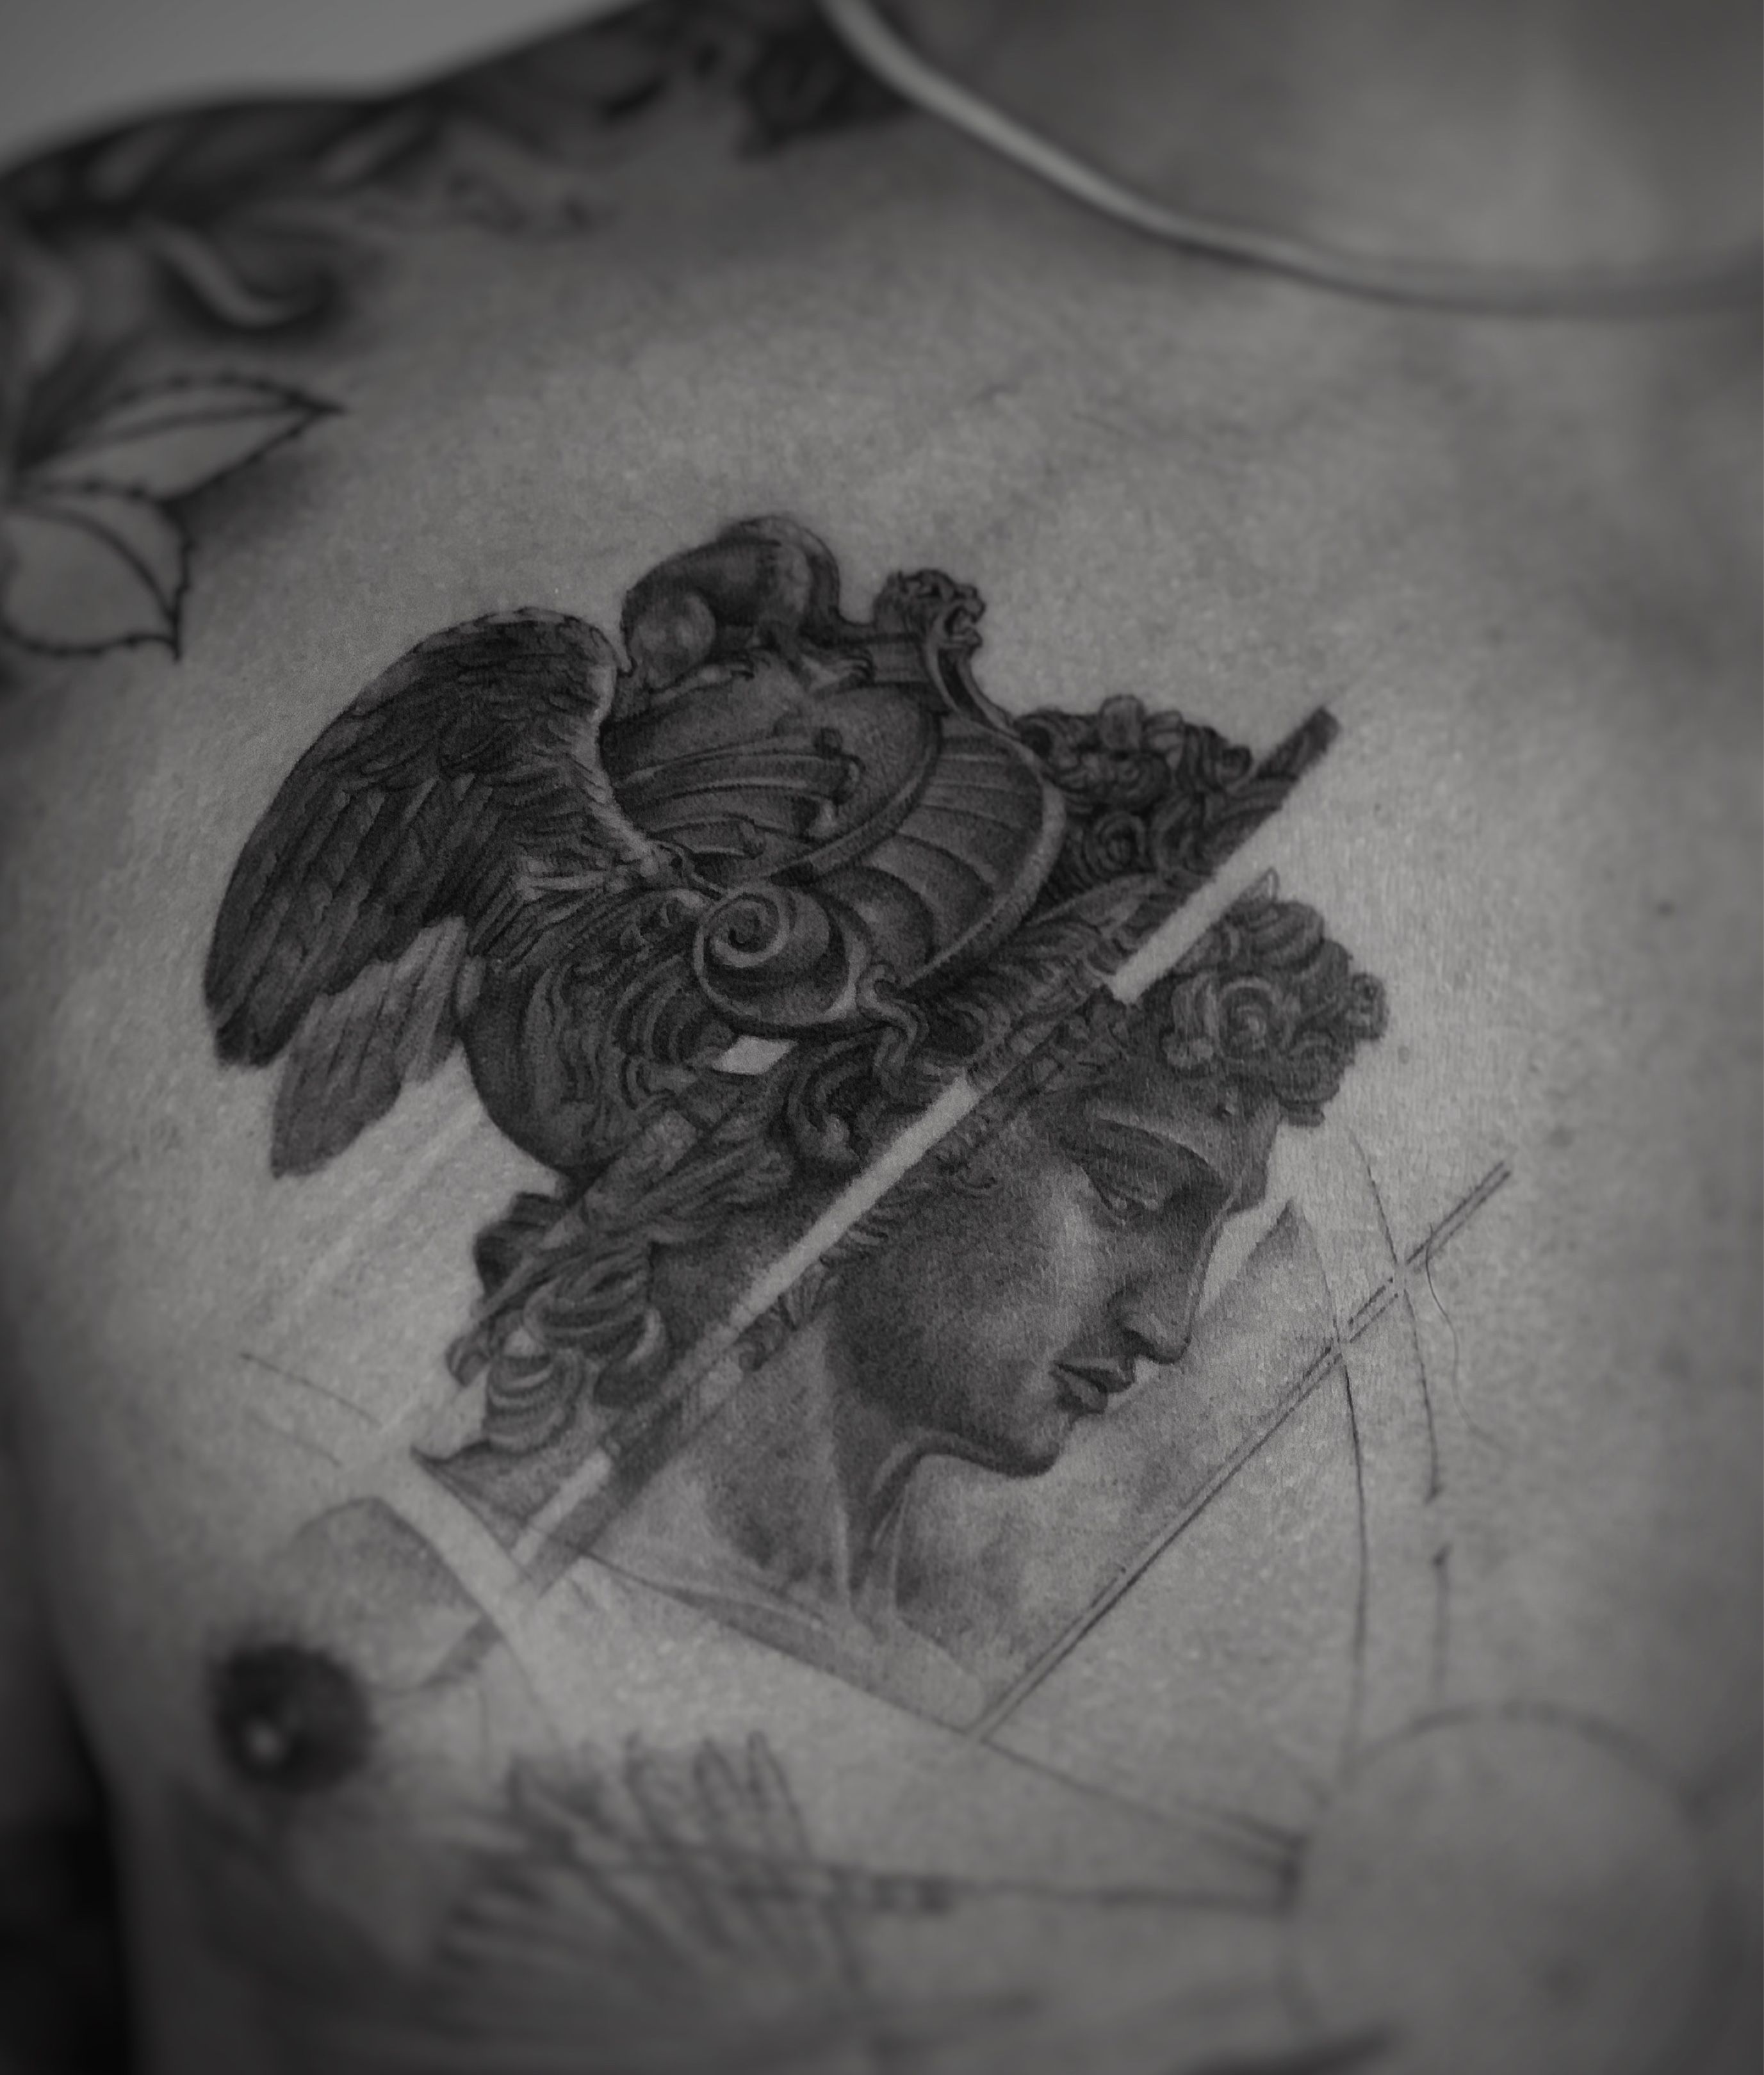 Tattoo uploaded by Paige Jean Tattoos • Perseus and Medusa Tattoo. Greek  mythology Tattoo. - Paige Jean Tattoos. Salt Lake City, Utah. • contact me  on my instagram @paigejeantattoos • Tattoodo